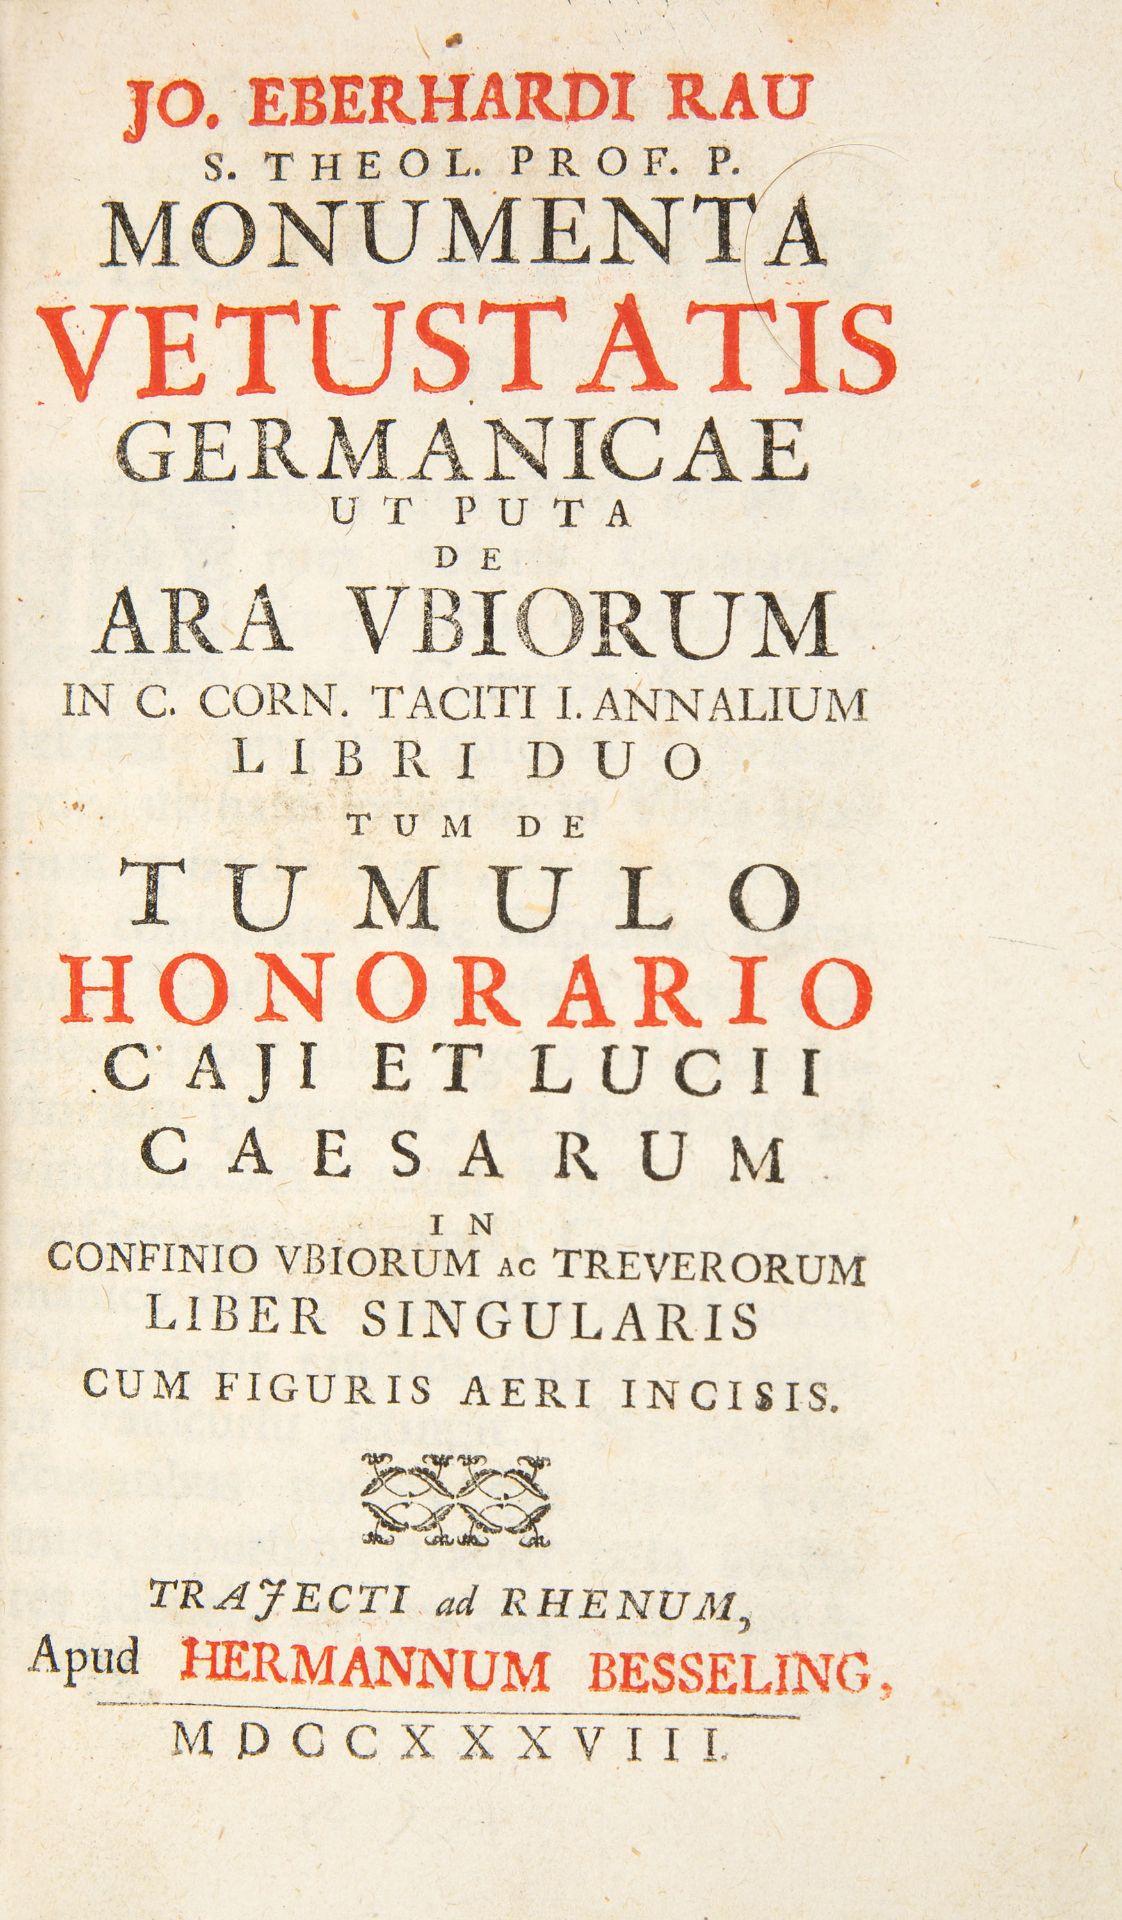 J. E. Rau, Monumenta vetustatis germanicae. Utrecht: H. Besseling 1738.